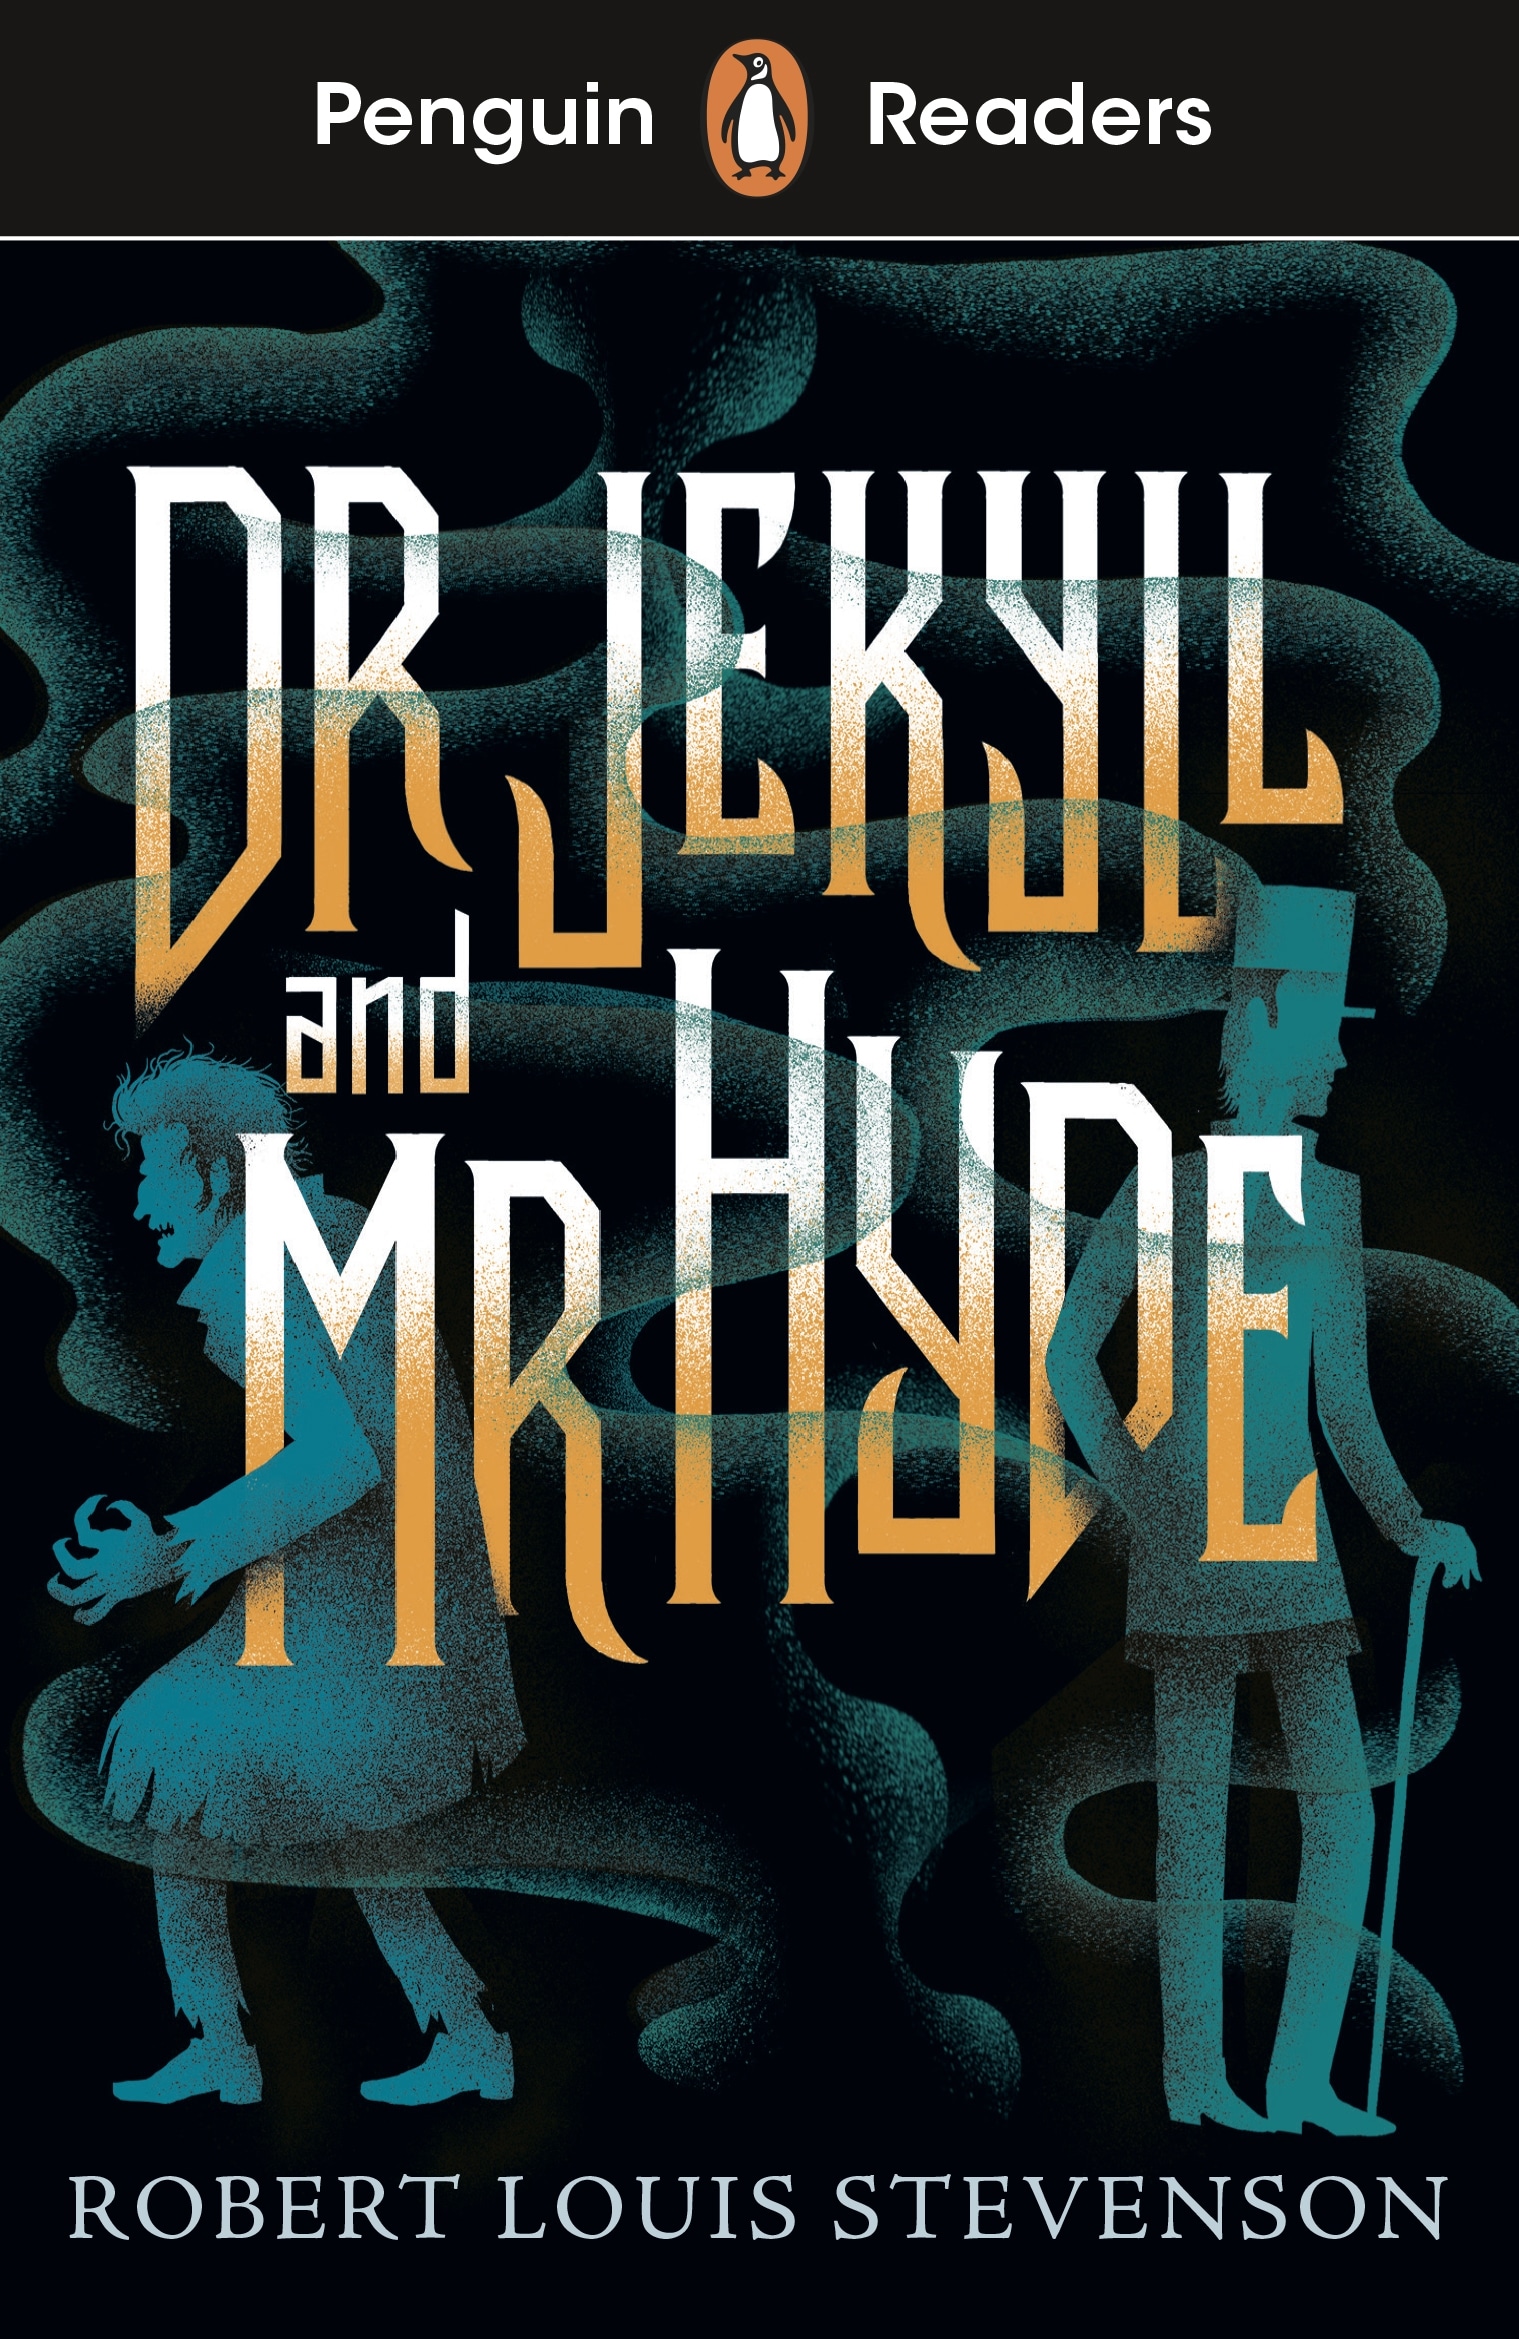 Book “Penguin Readers Level 1: Jekyll and Hyde (ELT Graded Reader)” by Robert Louis Stevenson — May 6, 2021